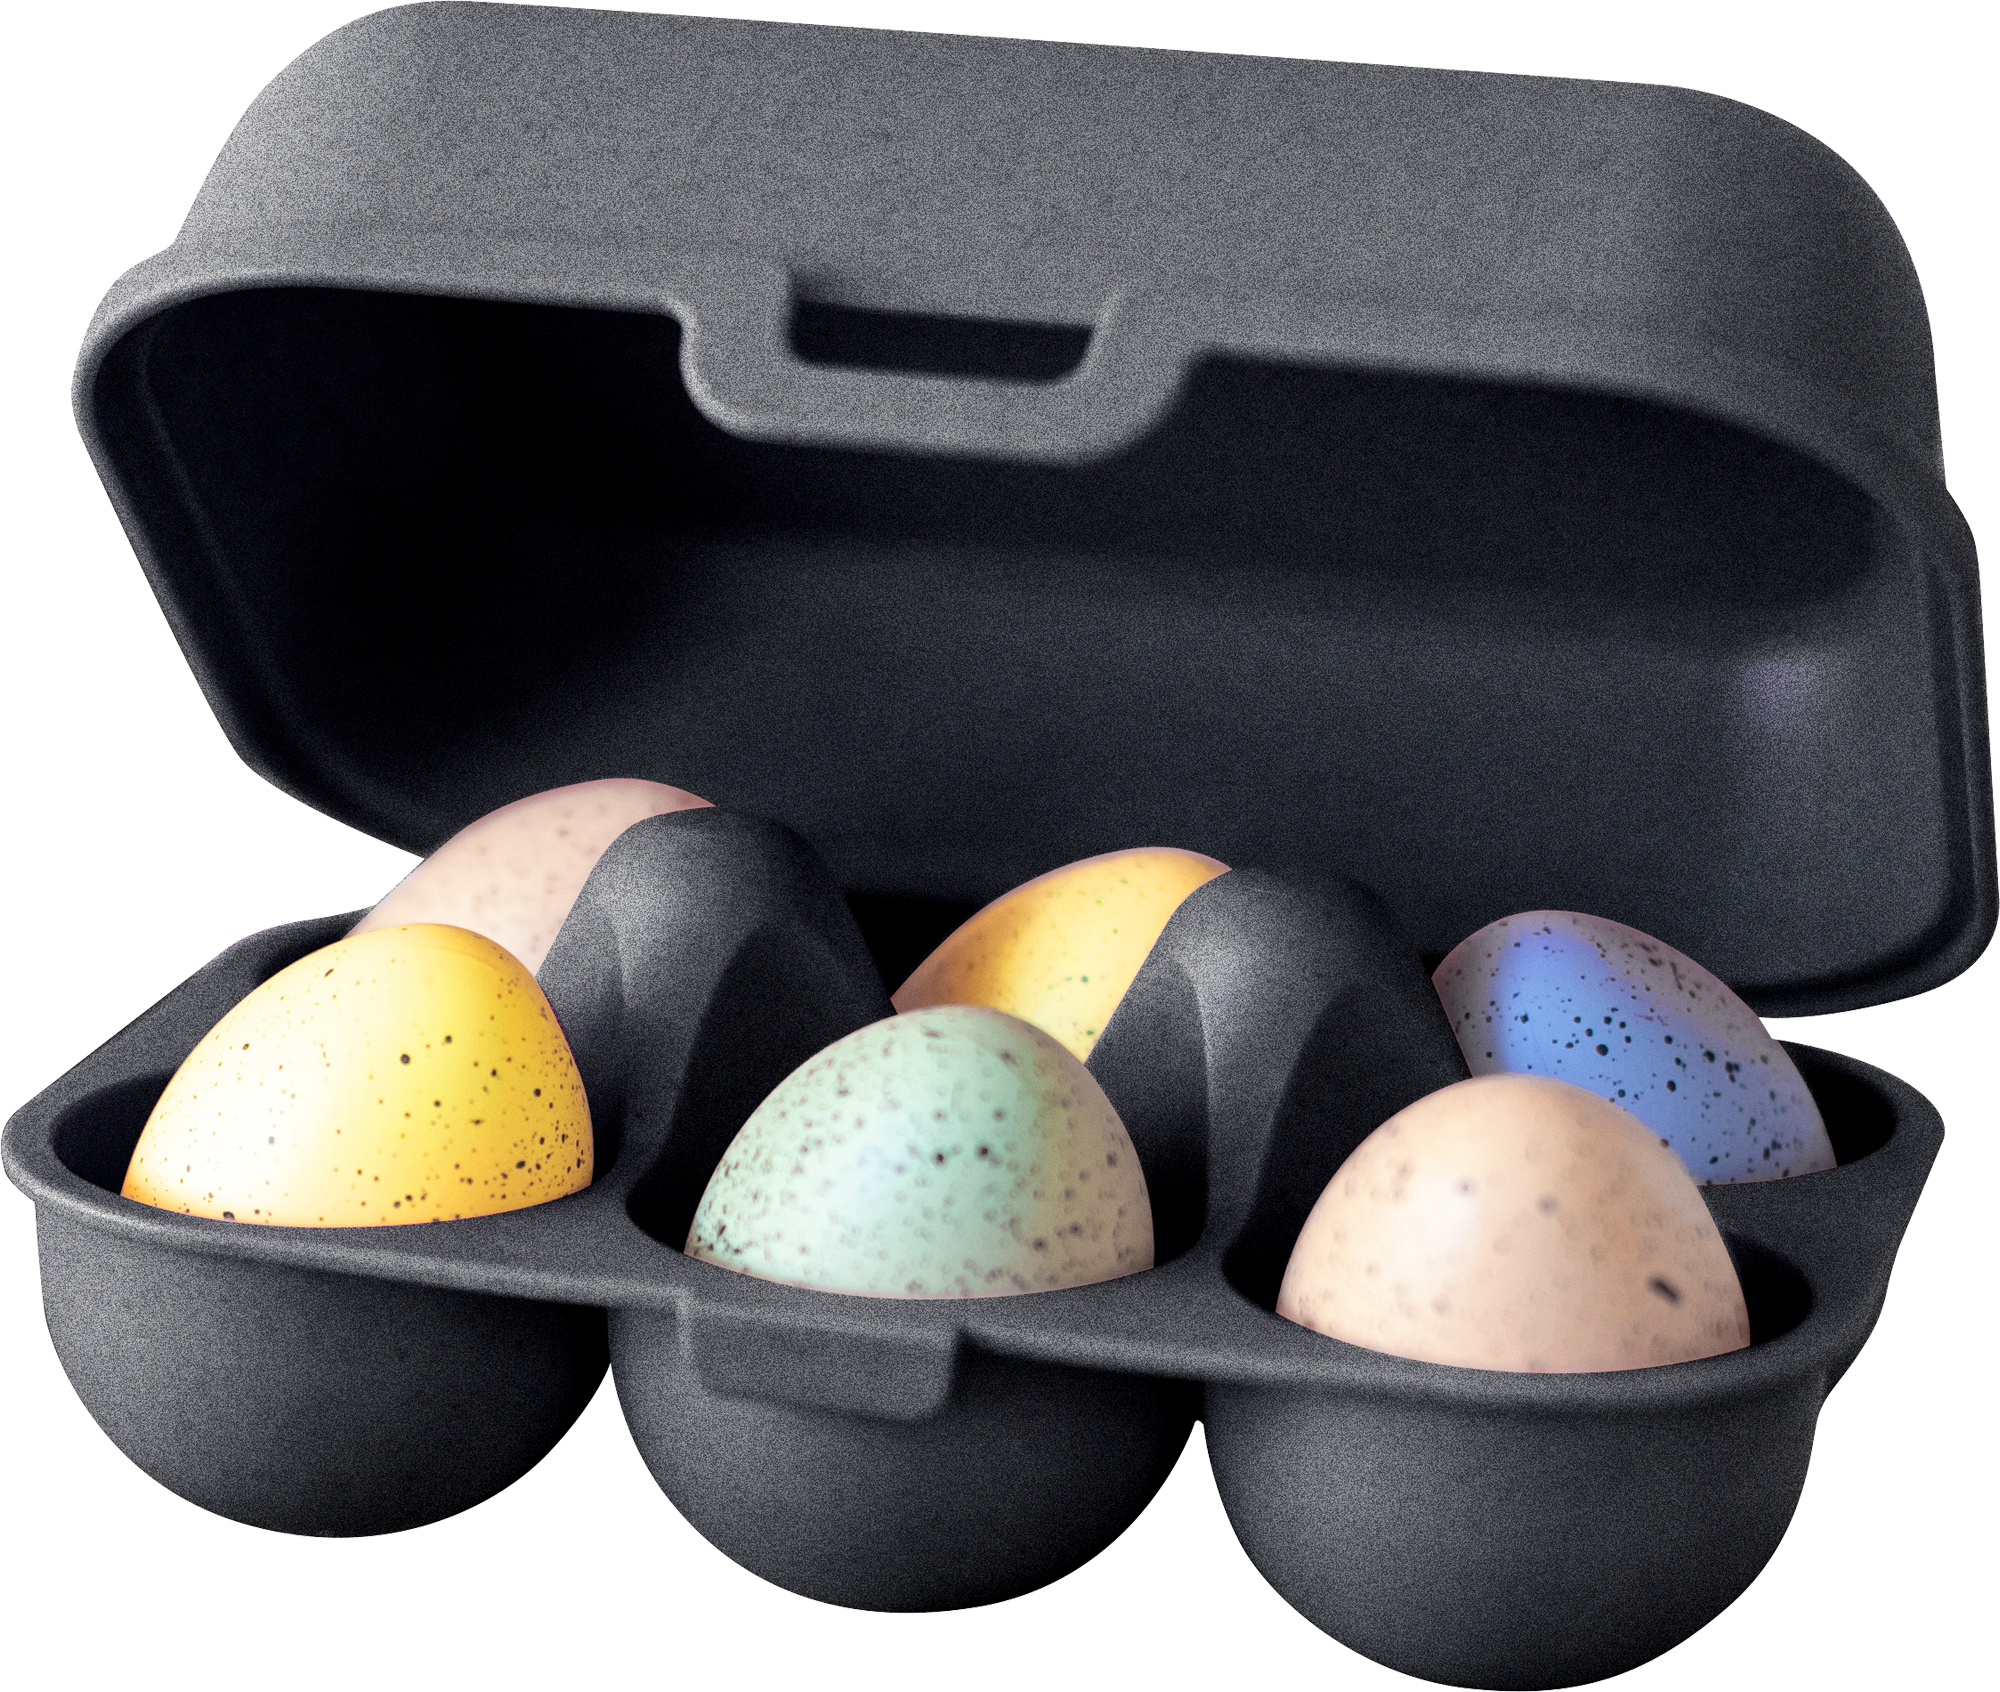 Koziol Eierbox Eggs to go mini 6Stk. ash grey